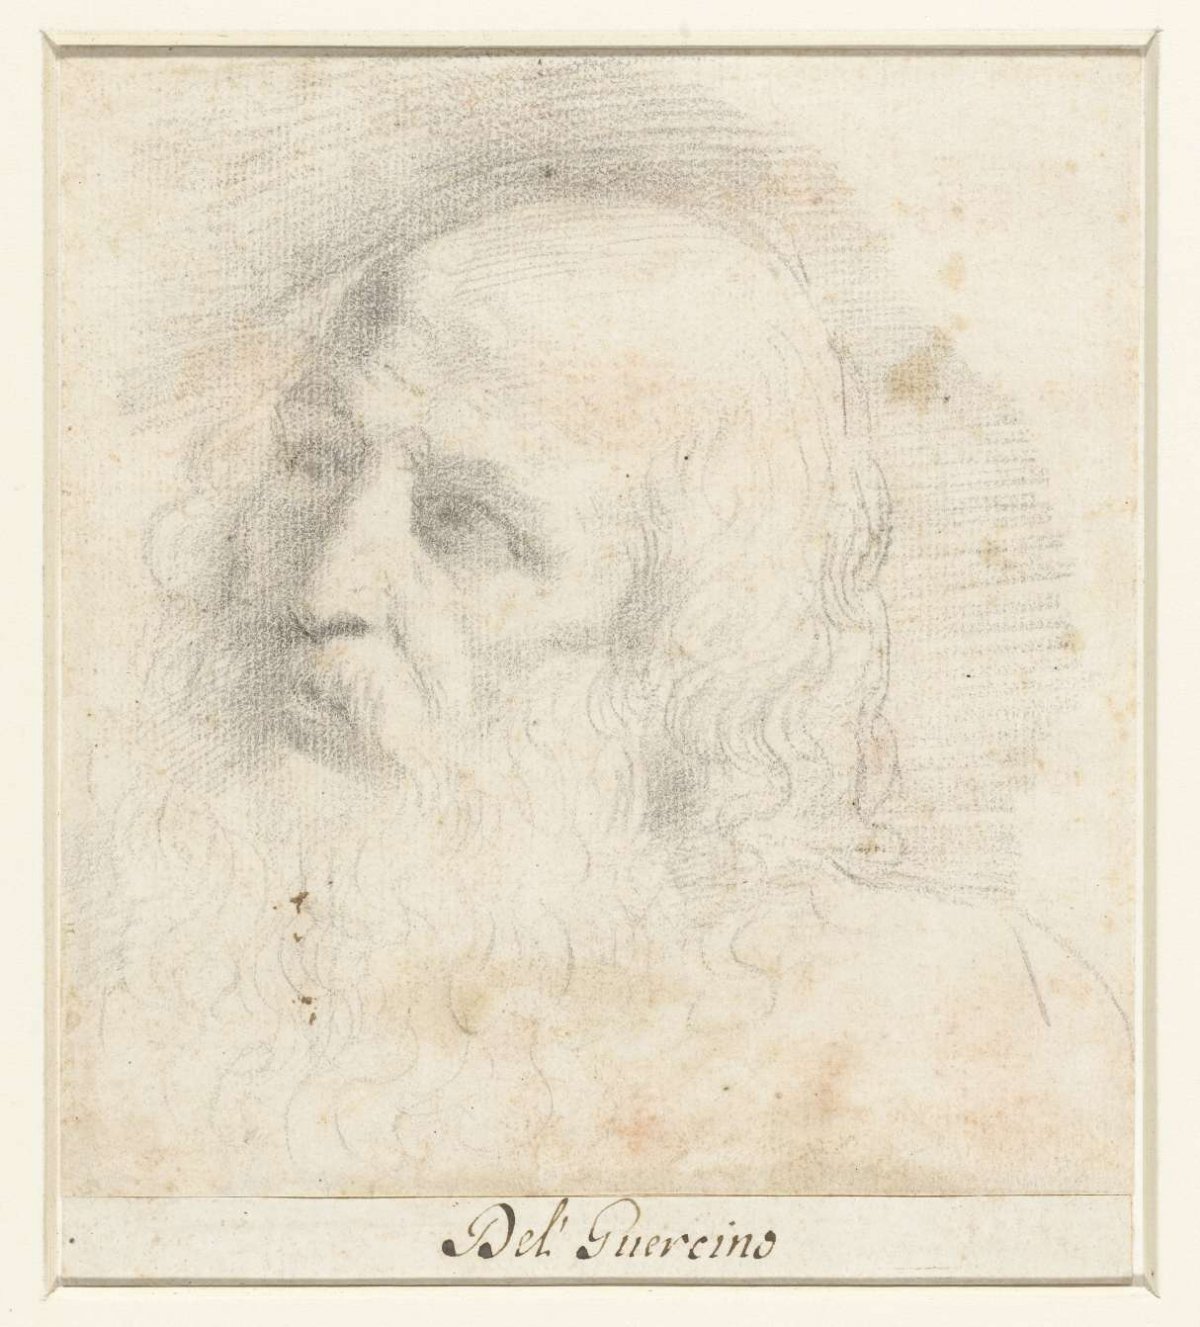 Head of an old man, Guercino, 1601 - 1666